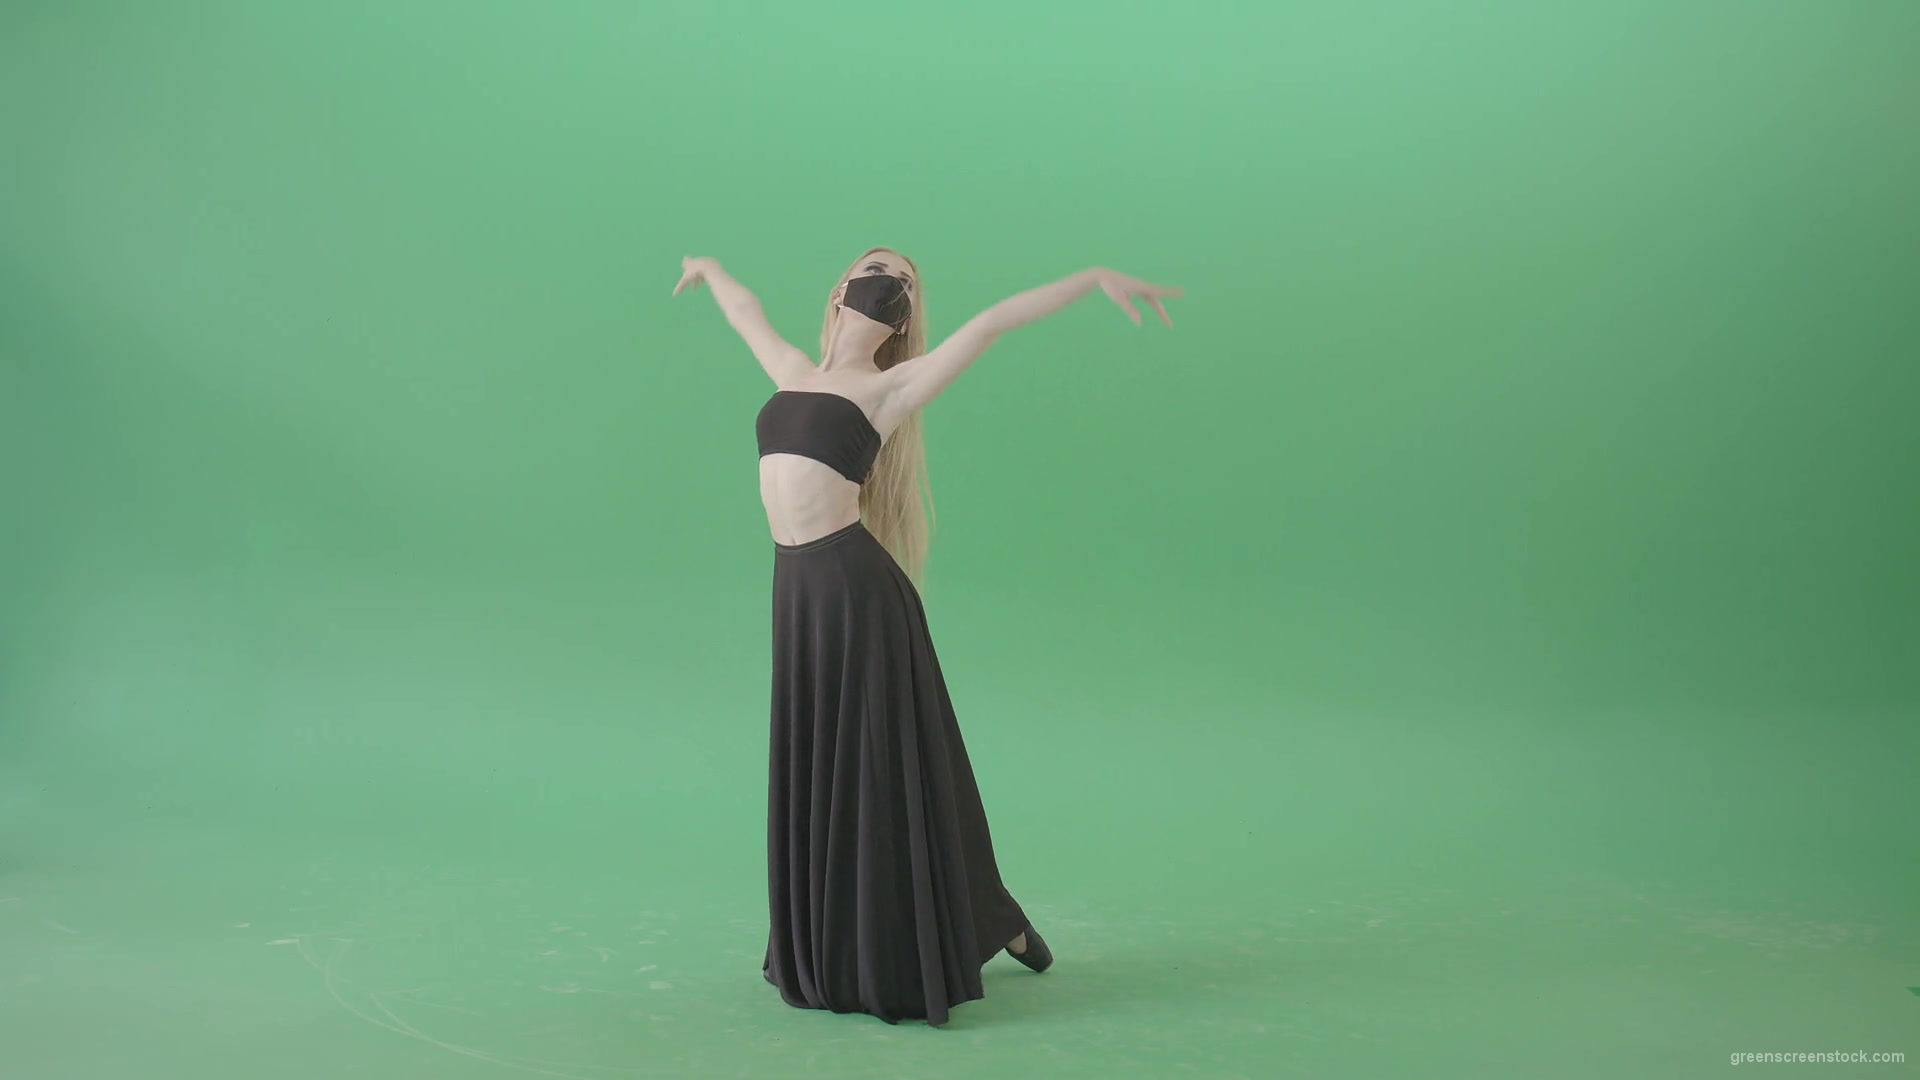 Blonde-Ballet-girl-in-black-dress-and-mask-dancing-Corona-Virus-flamenco-on-green-screen-4K-Video-Footage-1920_009 Green Screen Stock